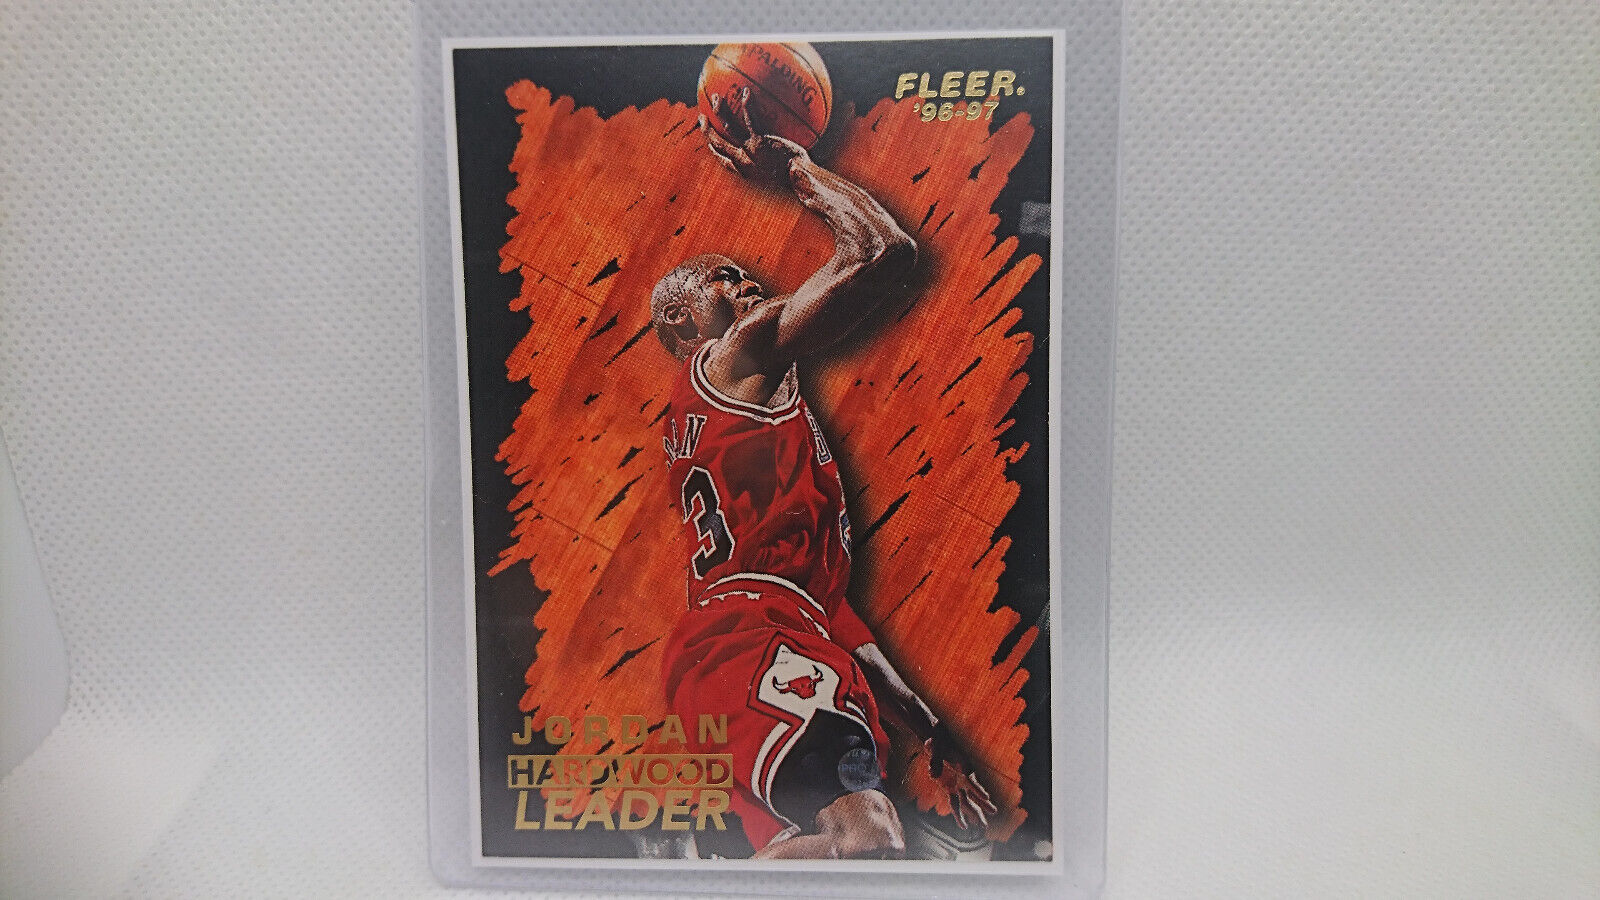 1996-97 Fleer Michael Jordan Hardwood Leader Card